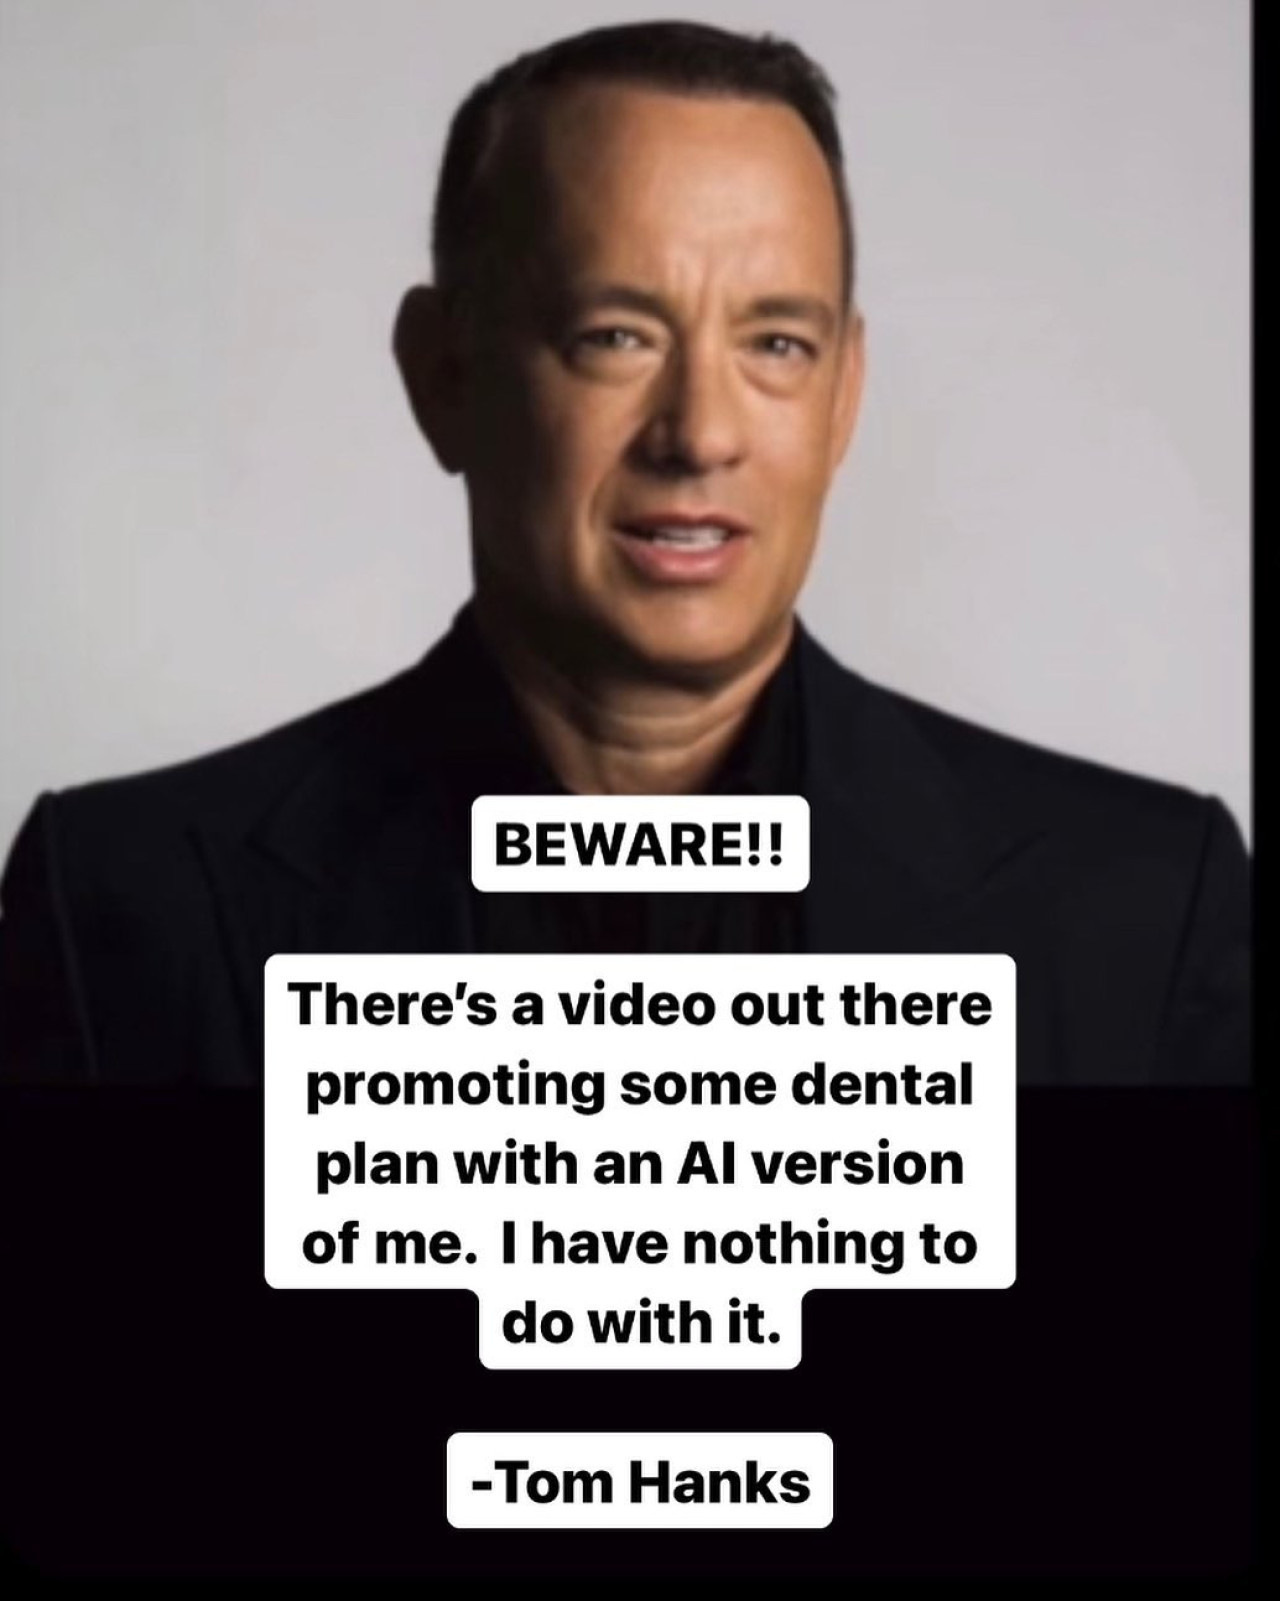 La denuncia de Tom Hanks. Foto: Instagram.